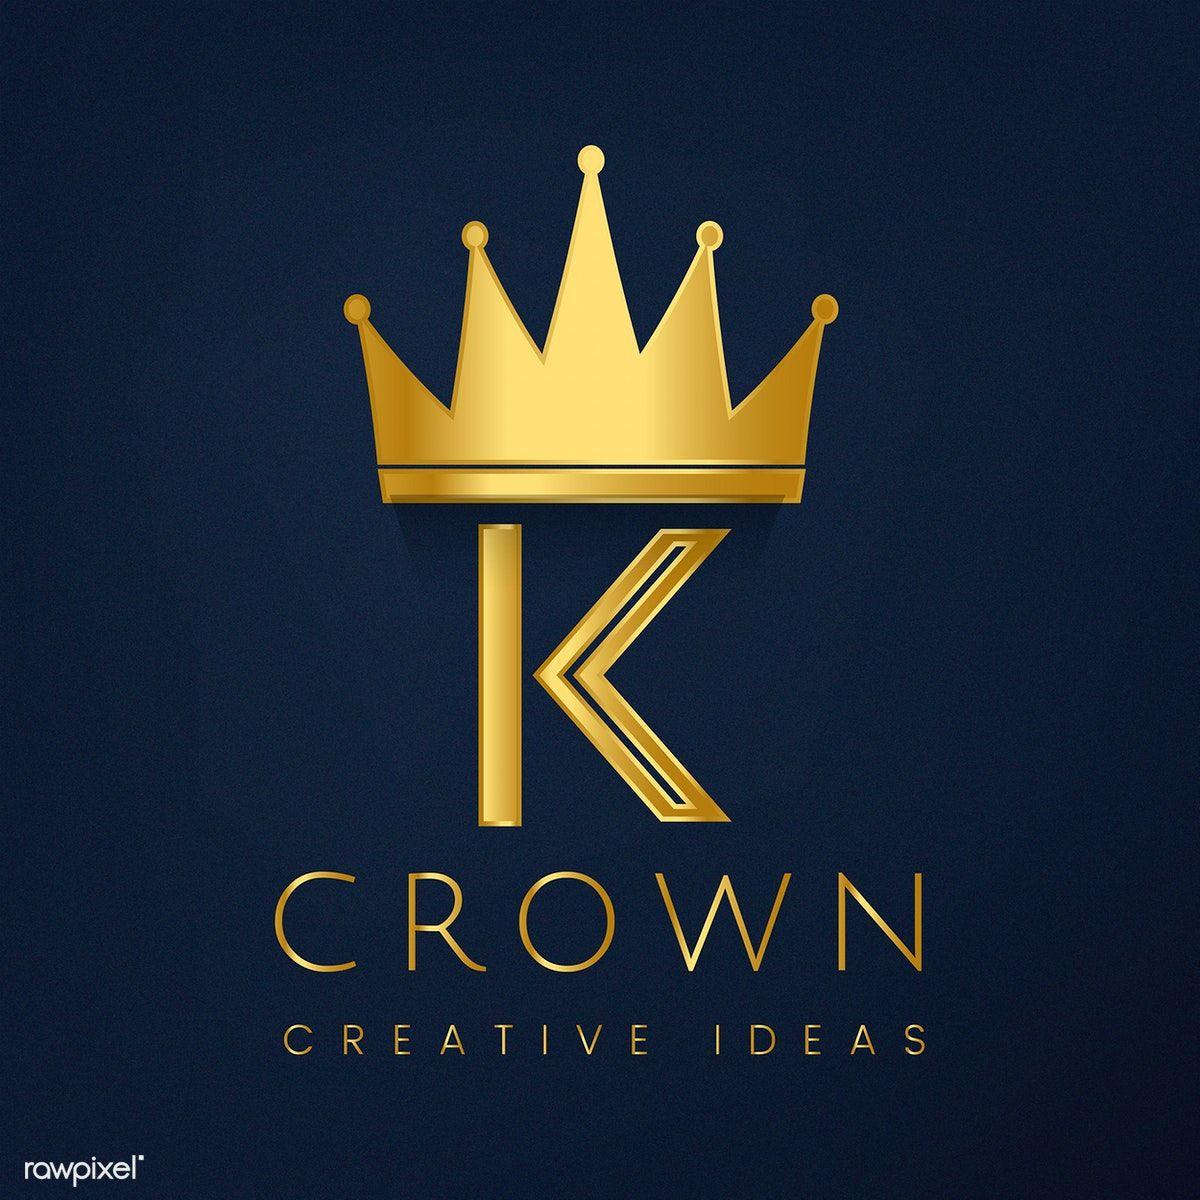 Gold Crown Brand Logo - Golden crown logo. Free stock vector